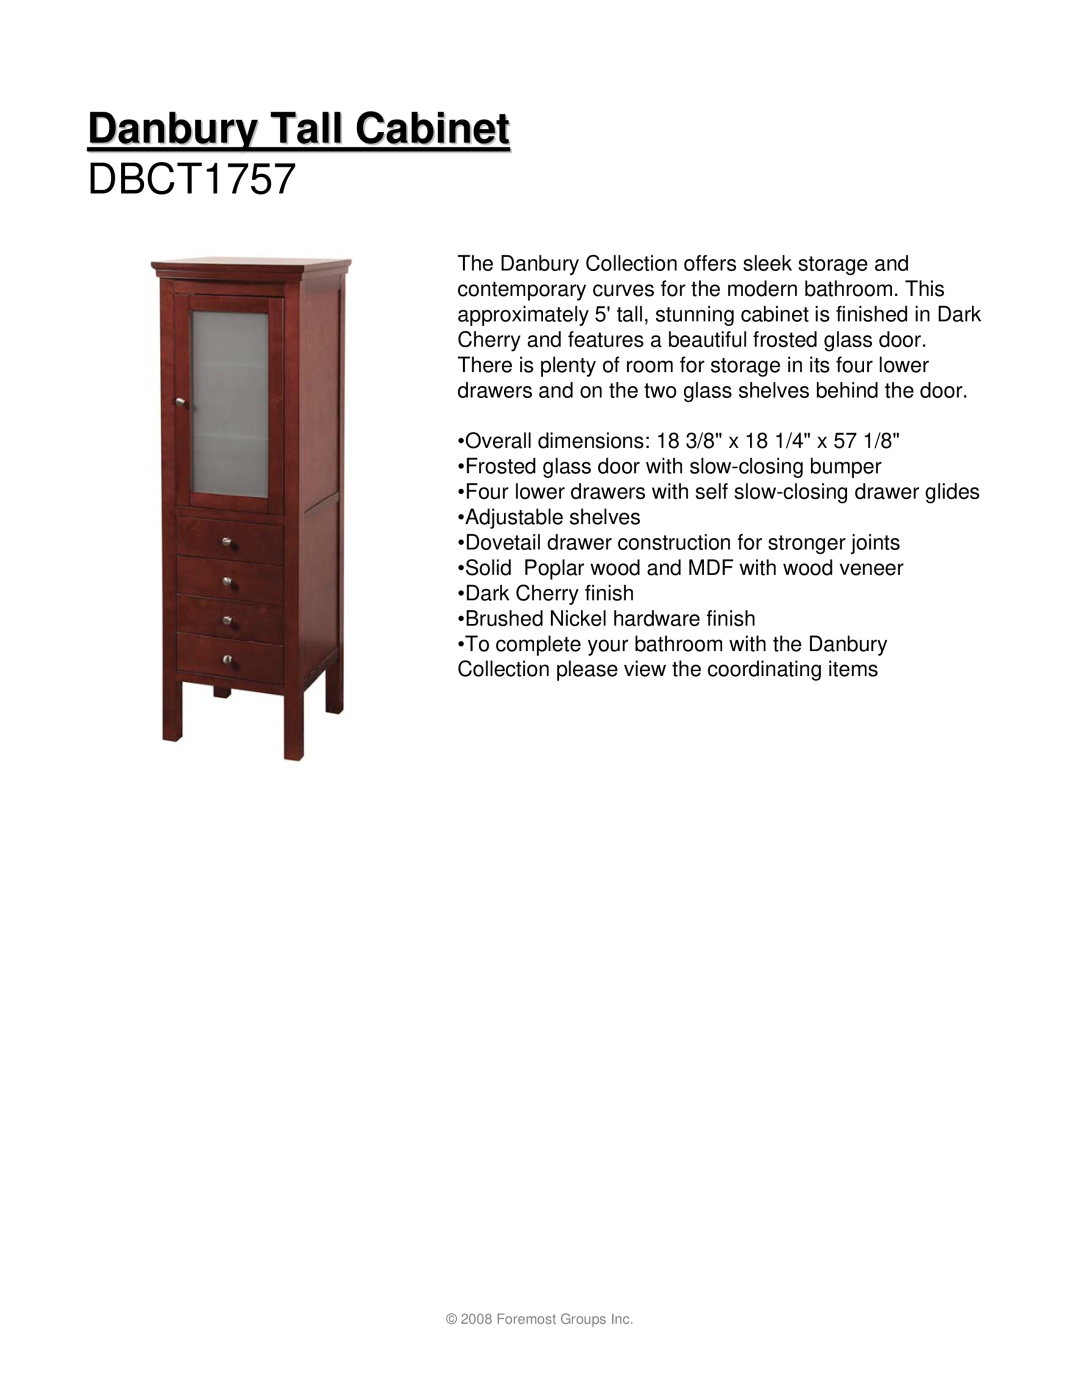 Husky DBCM3933, DBCA4222 dimensions Danbury Tall Cabinet, DBCT1757 